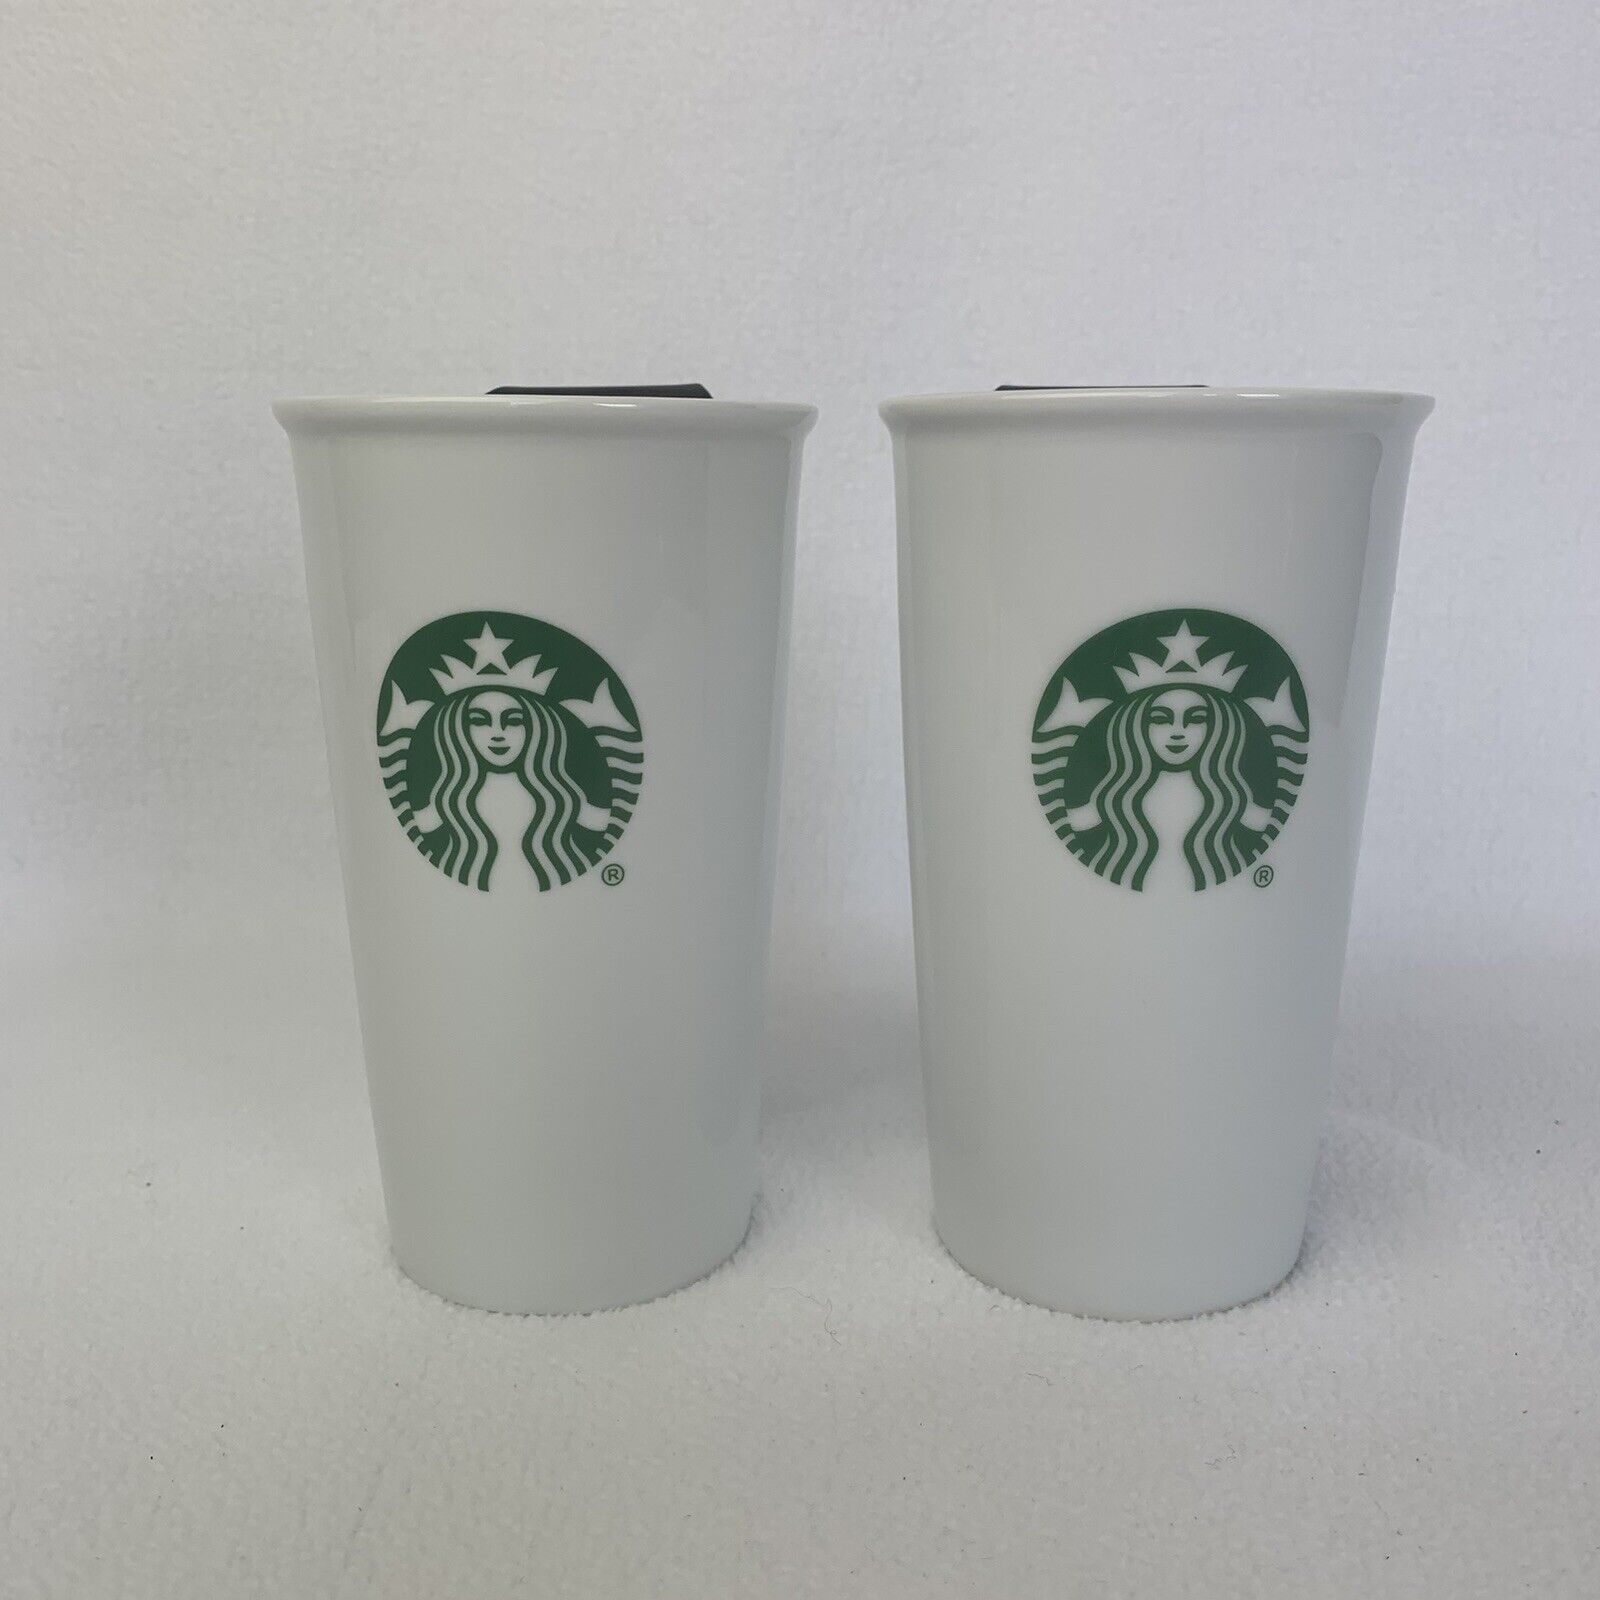 Starbucks Ceramic Travel Mugs 10 Oz White Tumbler with Black Lid Set of Two